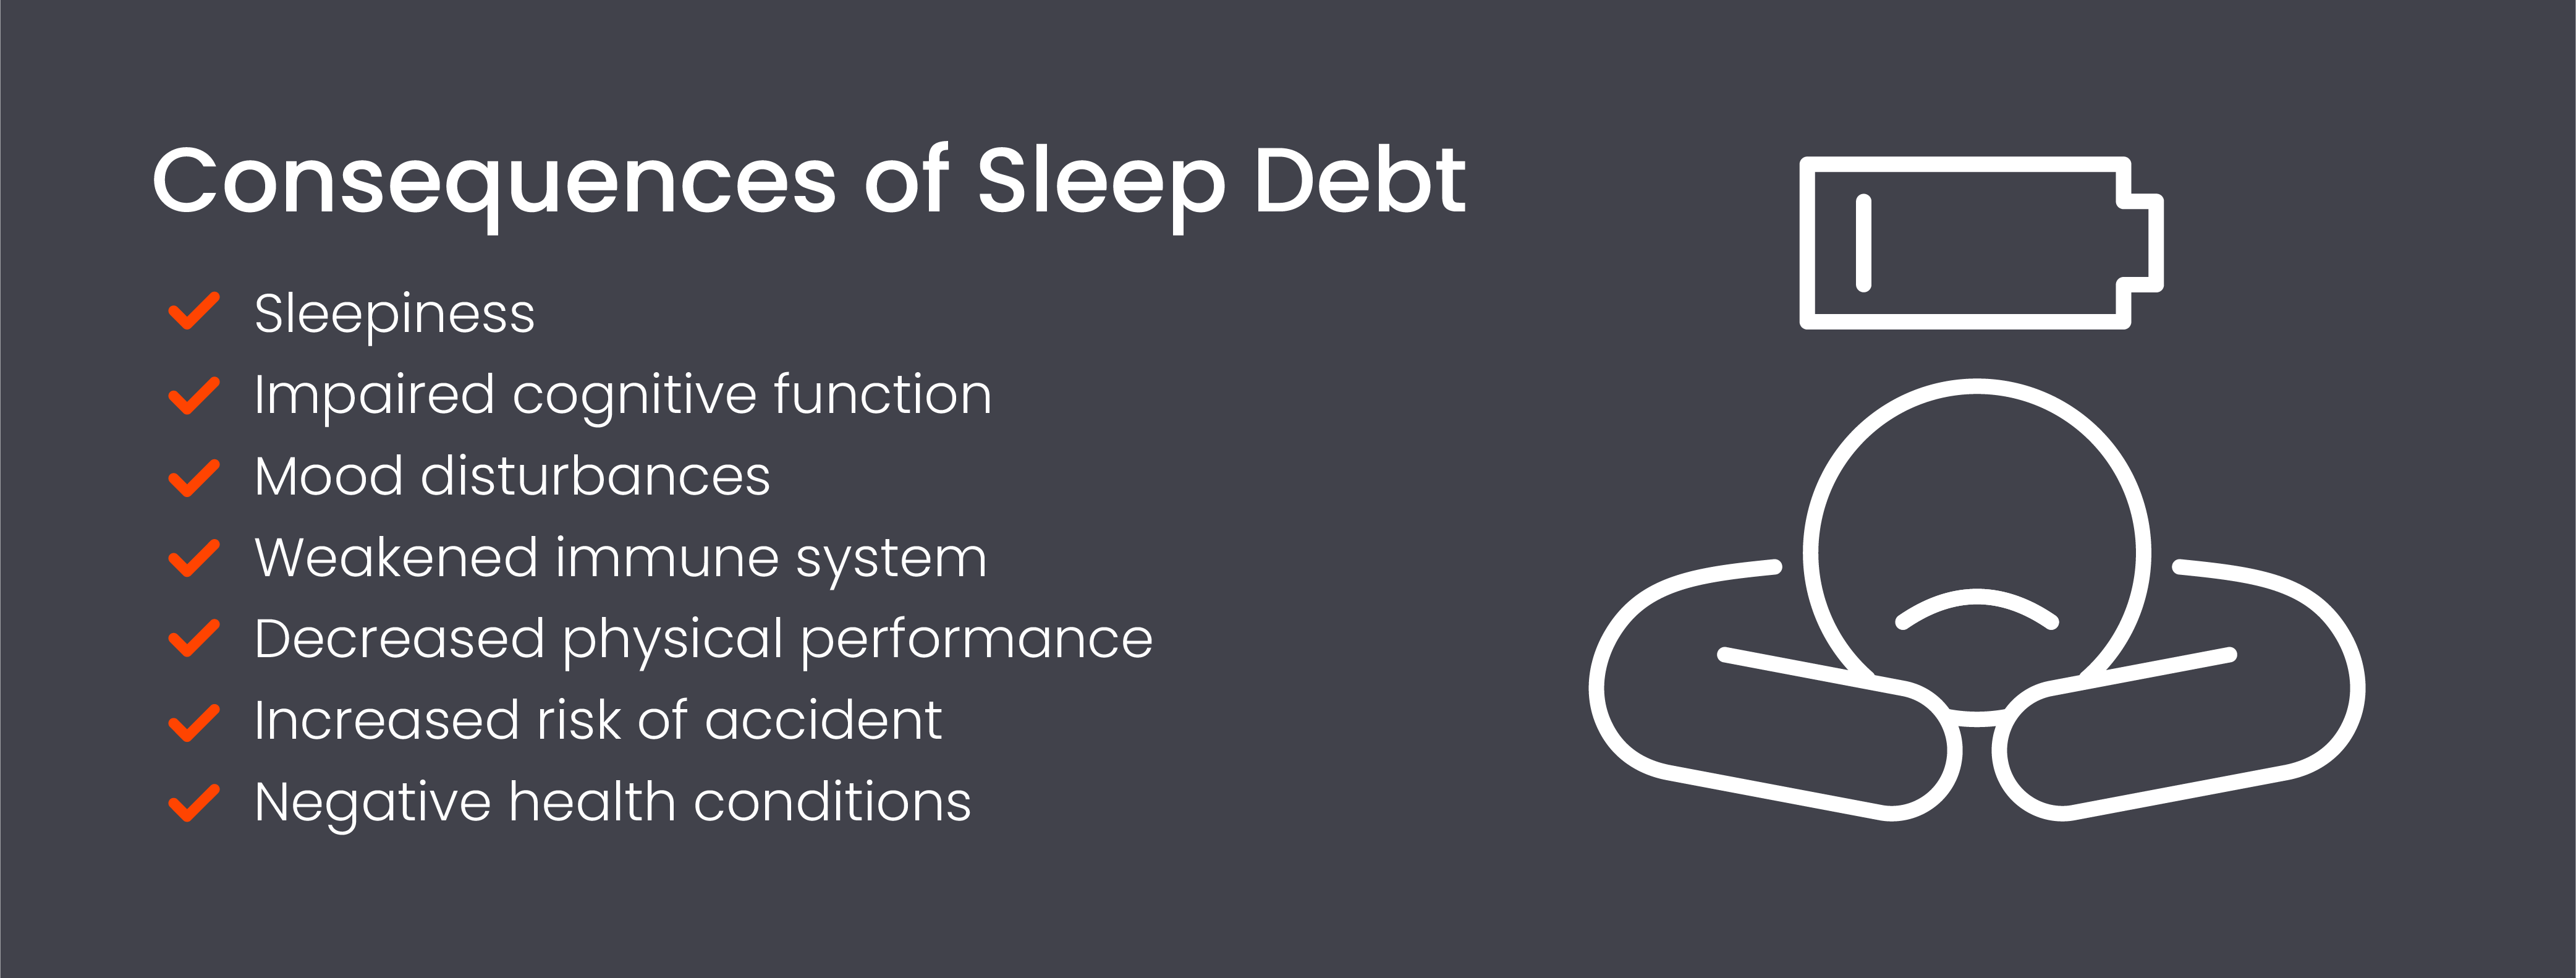 Consequences of sleep debt